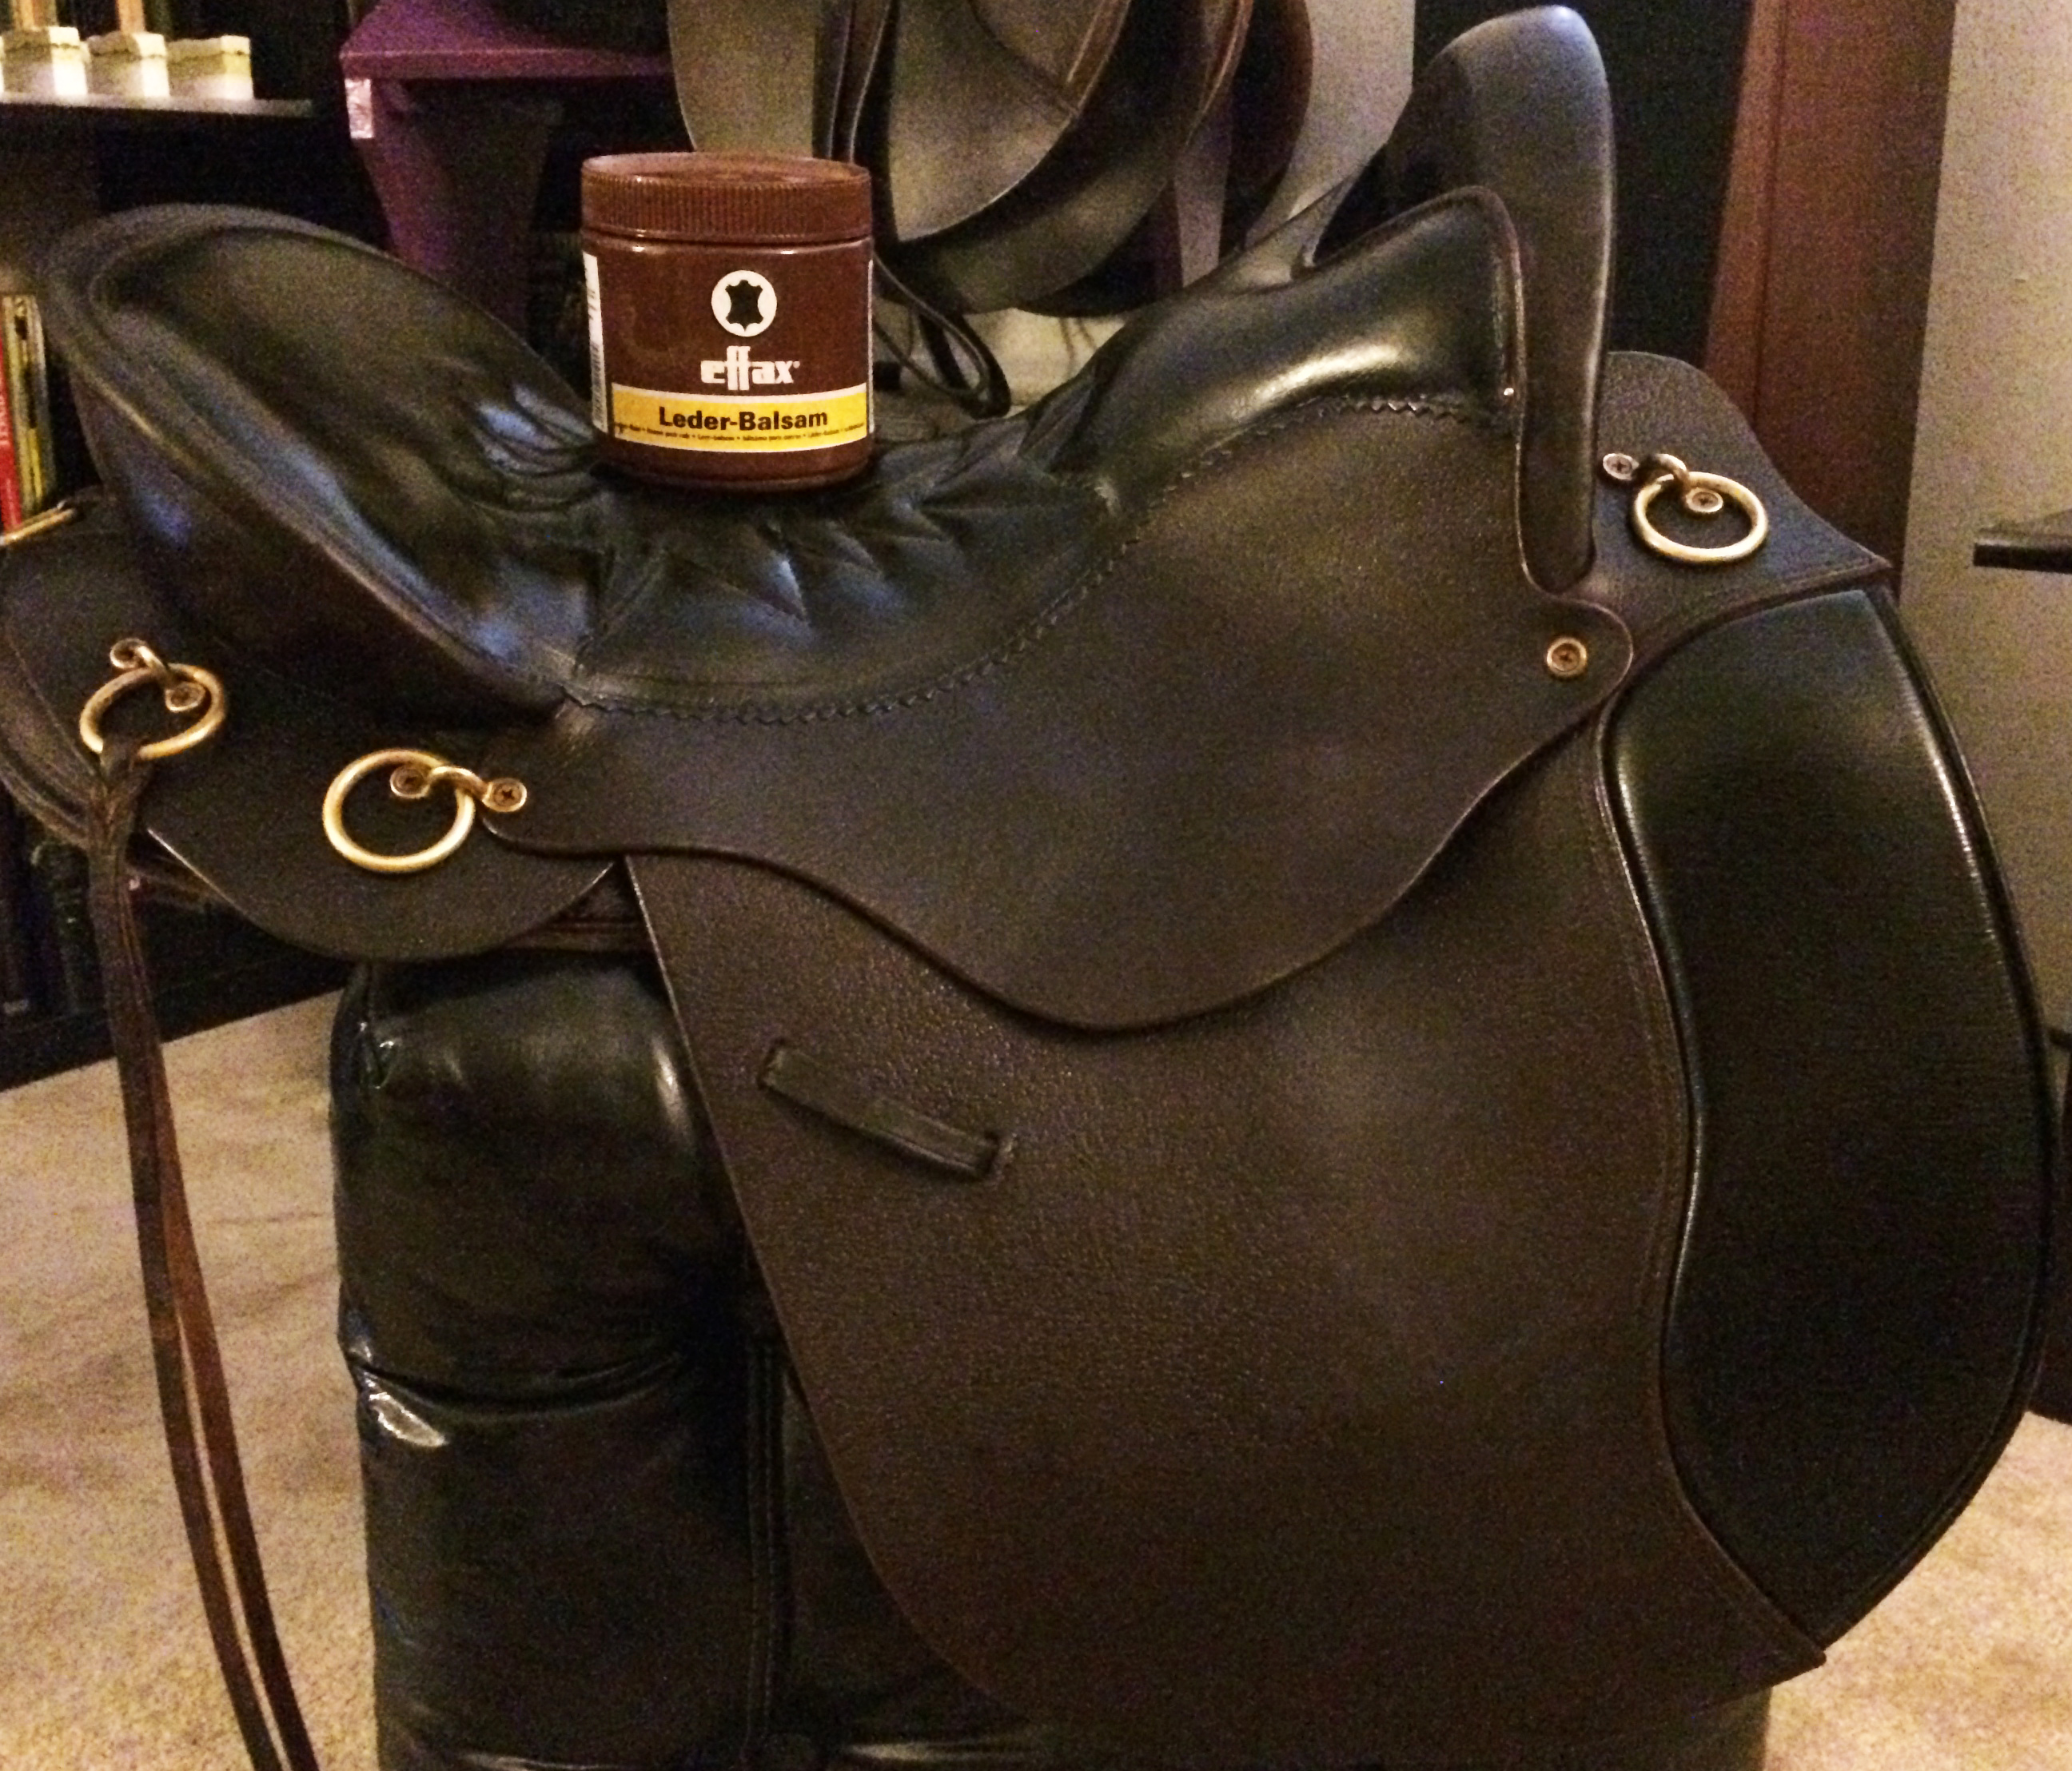 Tucker Saddle with Effax Leather Balm